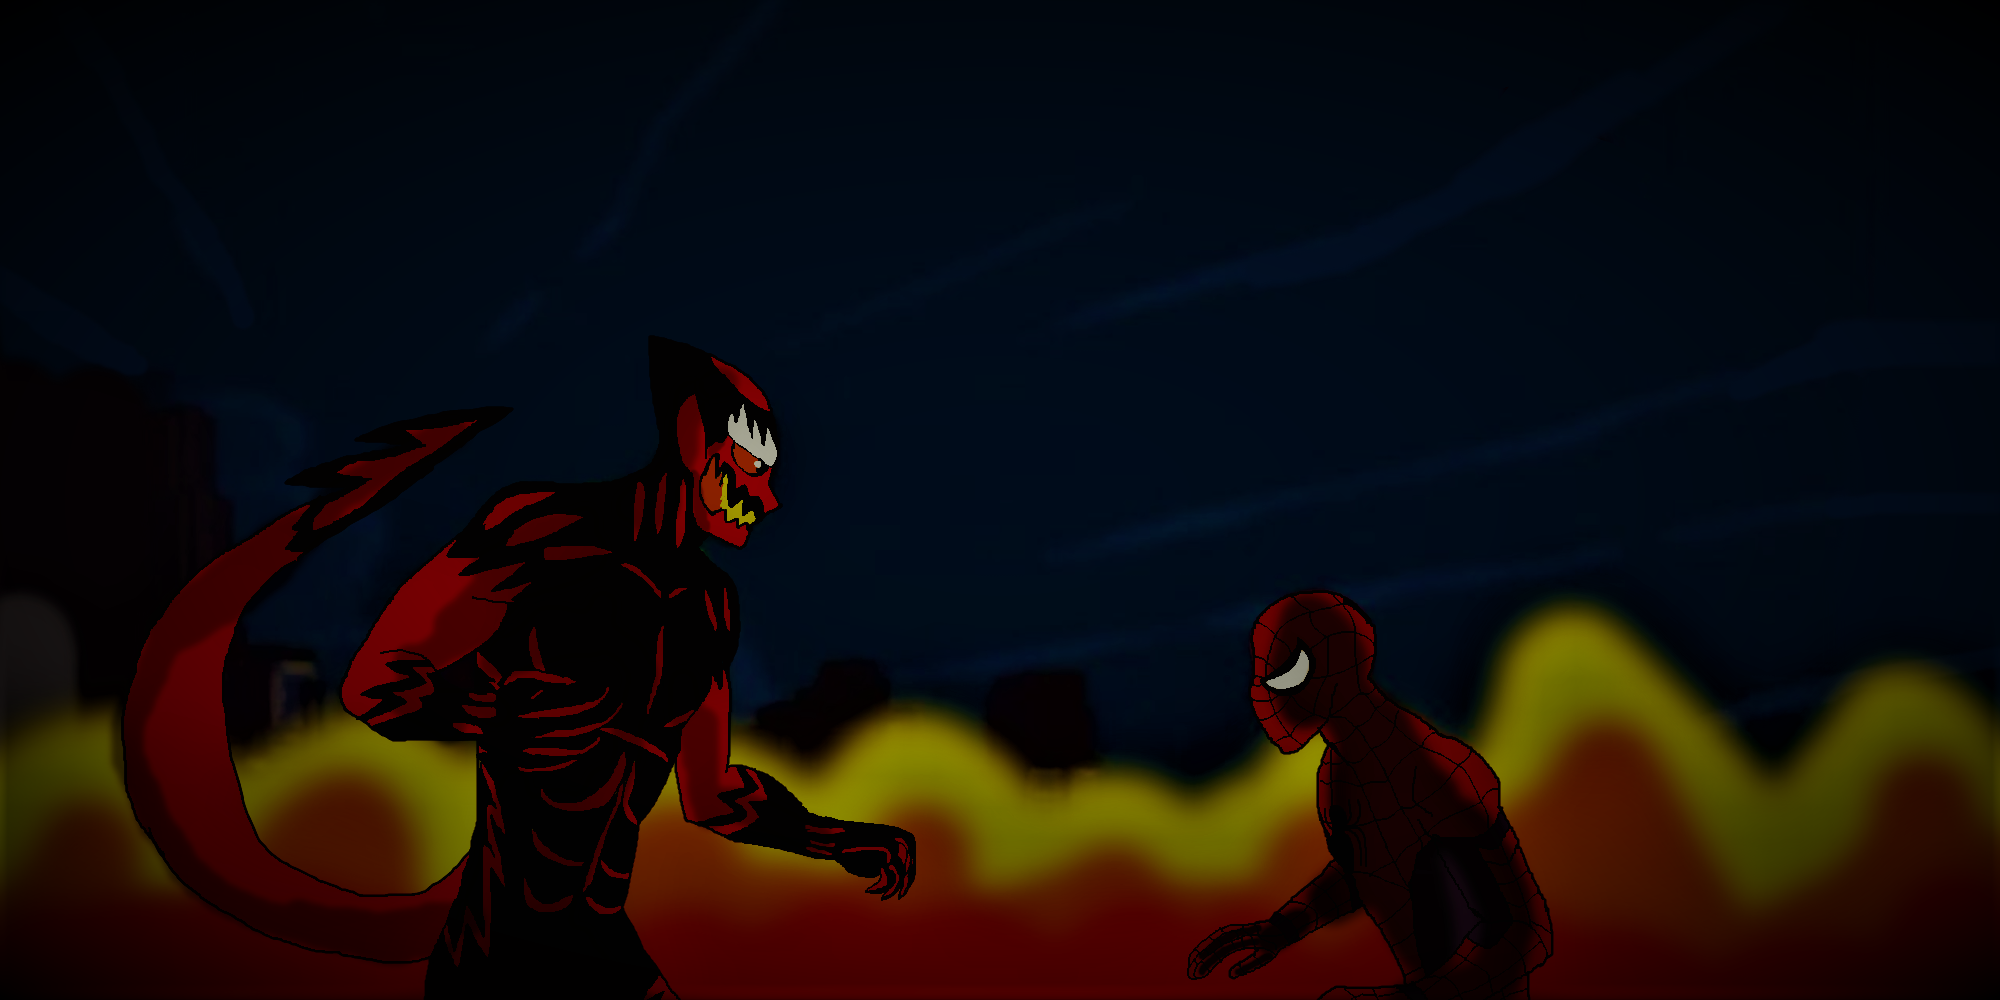 Spider-Man vs the Red Goblin by alvaxerox on DeviantArt